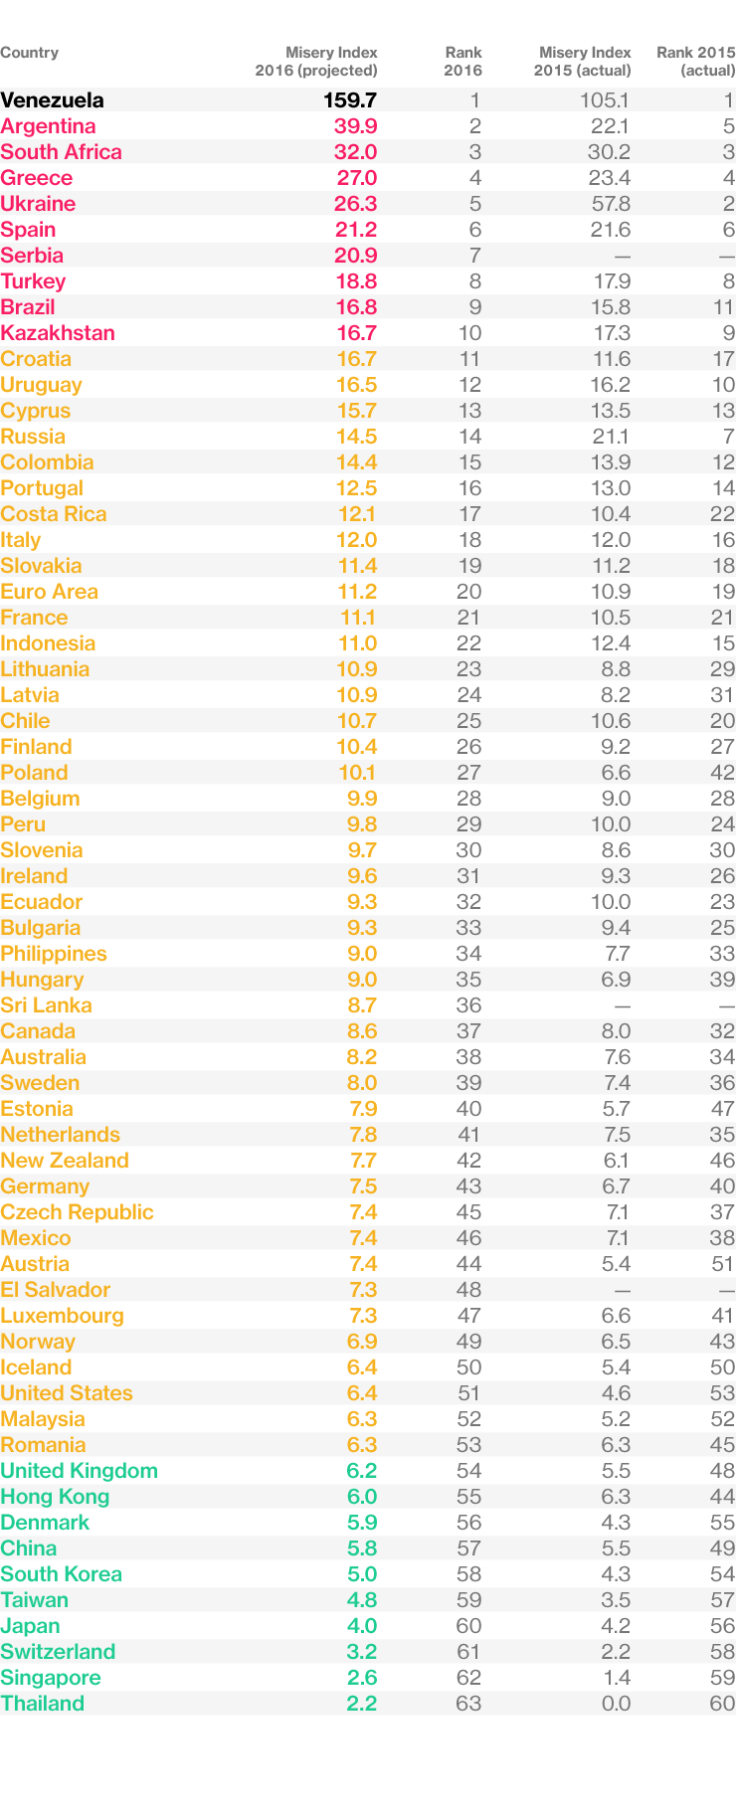 Venezuela, Argentina, South Africa, Greece and Ukraine are the world’s top 5 miserable economies